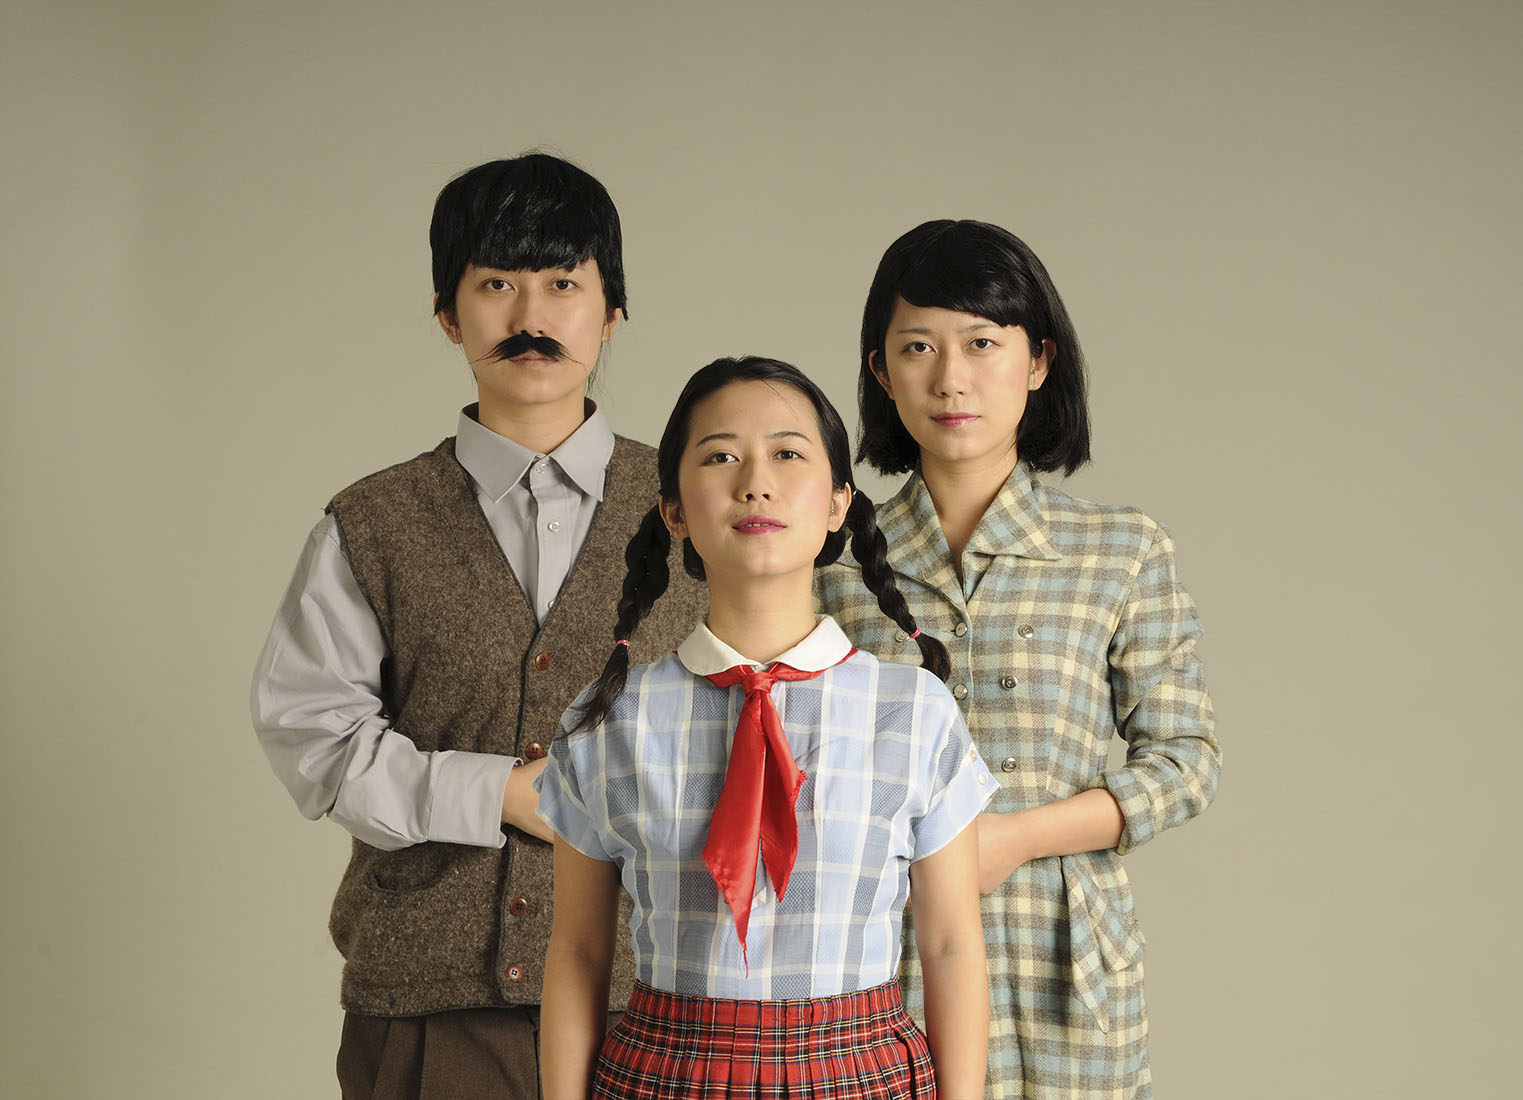 Xiao Han image: Family Portrait